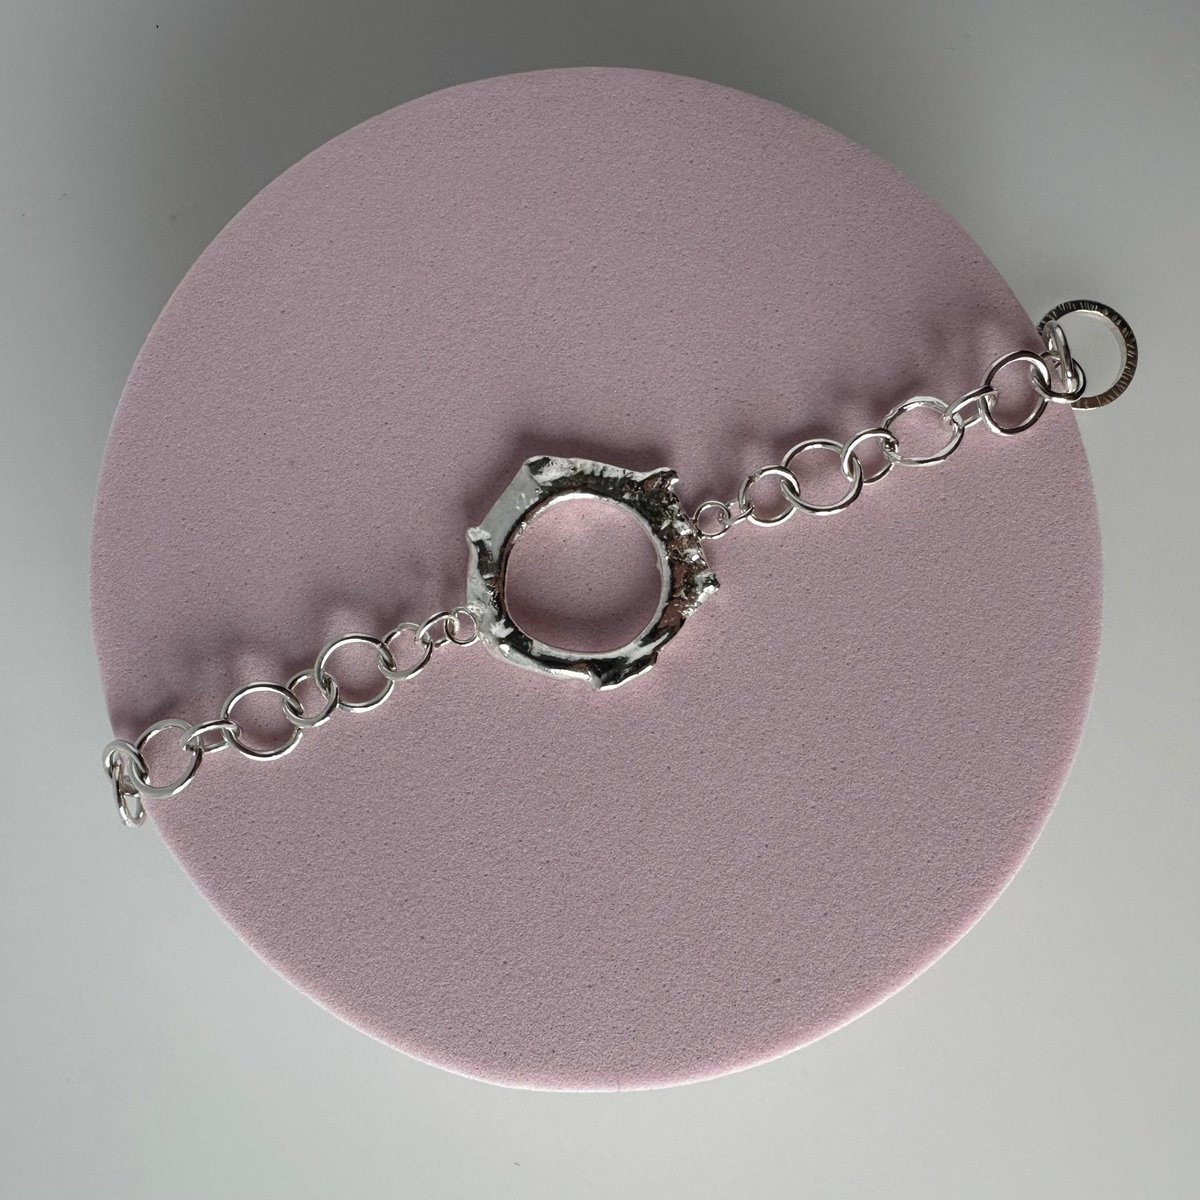 Freeform Silver Bracelet tuppu.net/625592a9 #UKHashtags #HandmadeHour #inbizhour #MHHSBD ##UKGiftHour #bizbubble #shopsmall #giftideas #Bracelets